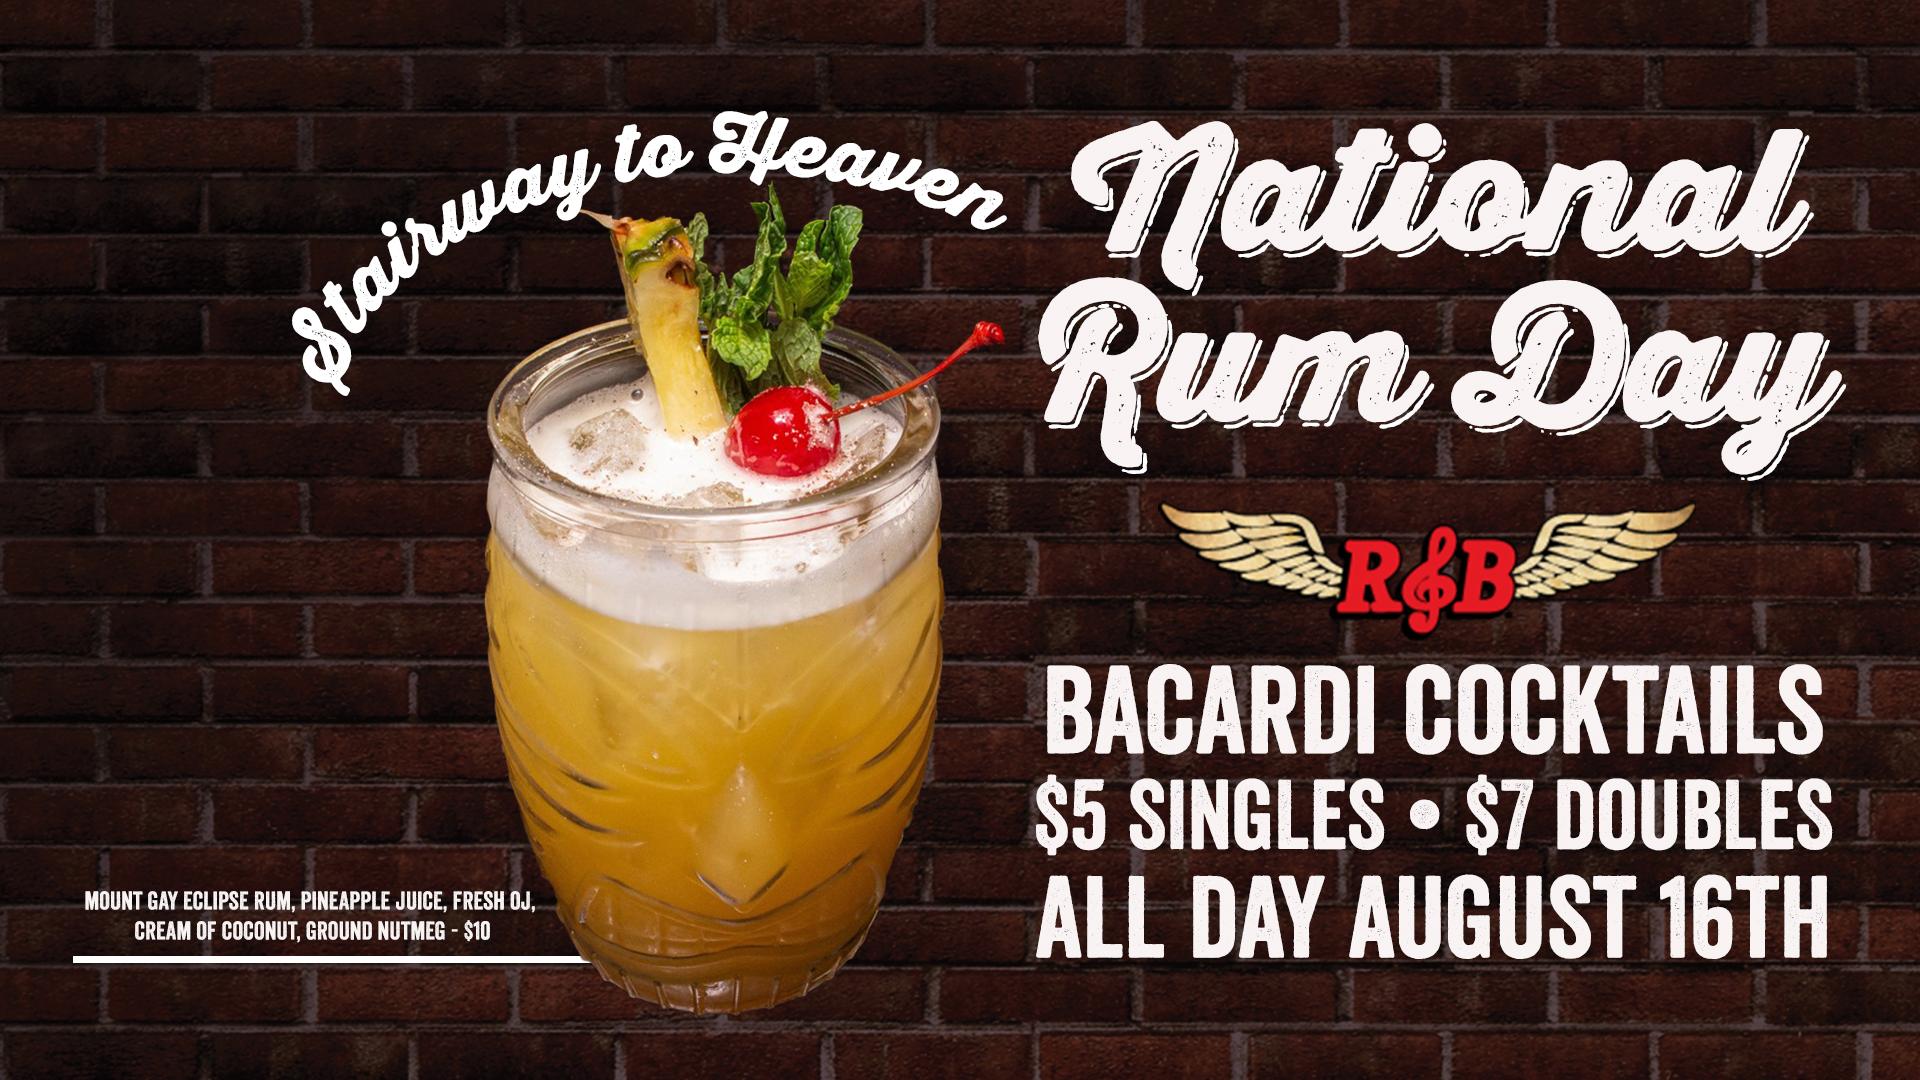 NAtional Rum Day at Rock & brews